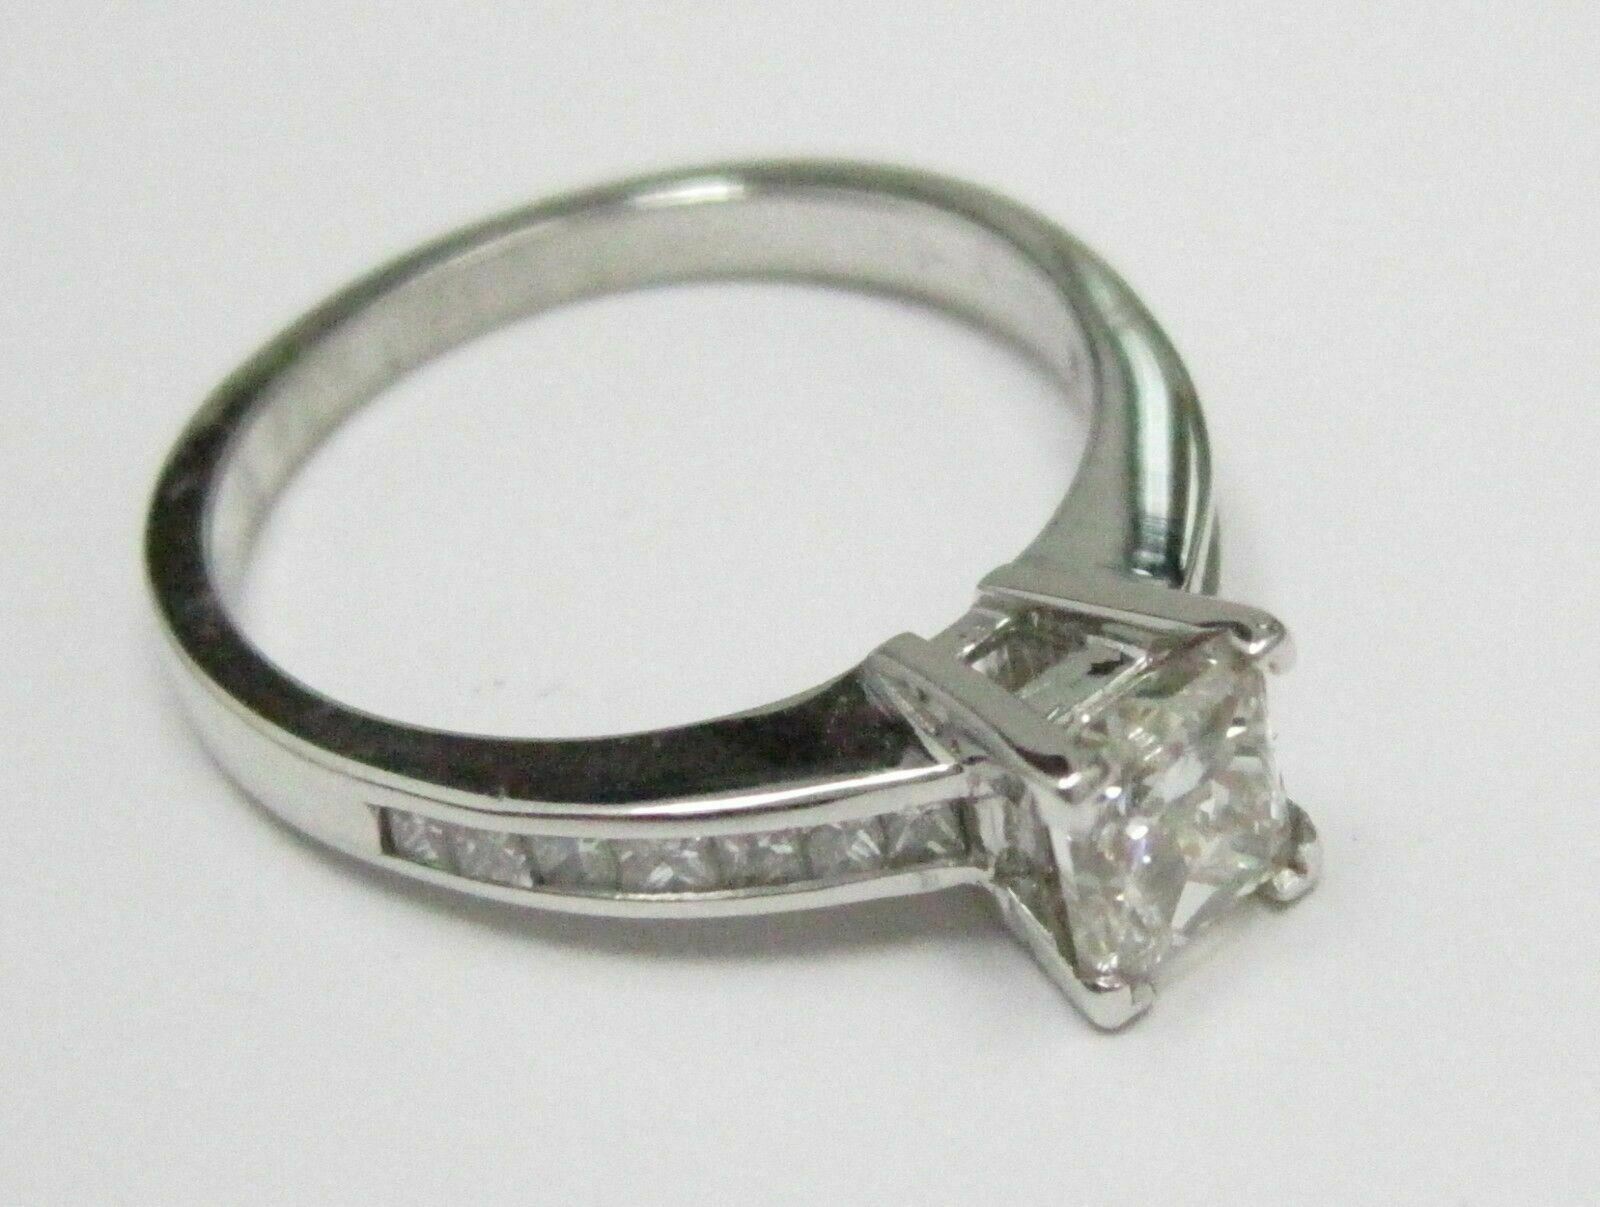 1.23 TCW Princess Cut Diamond Engagement Ring Size 7 H SI-2 14k White Gold